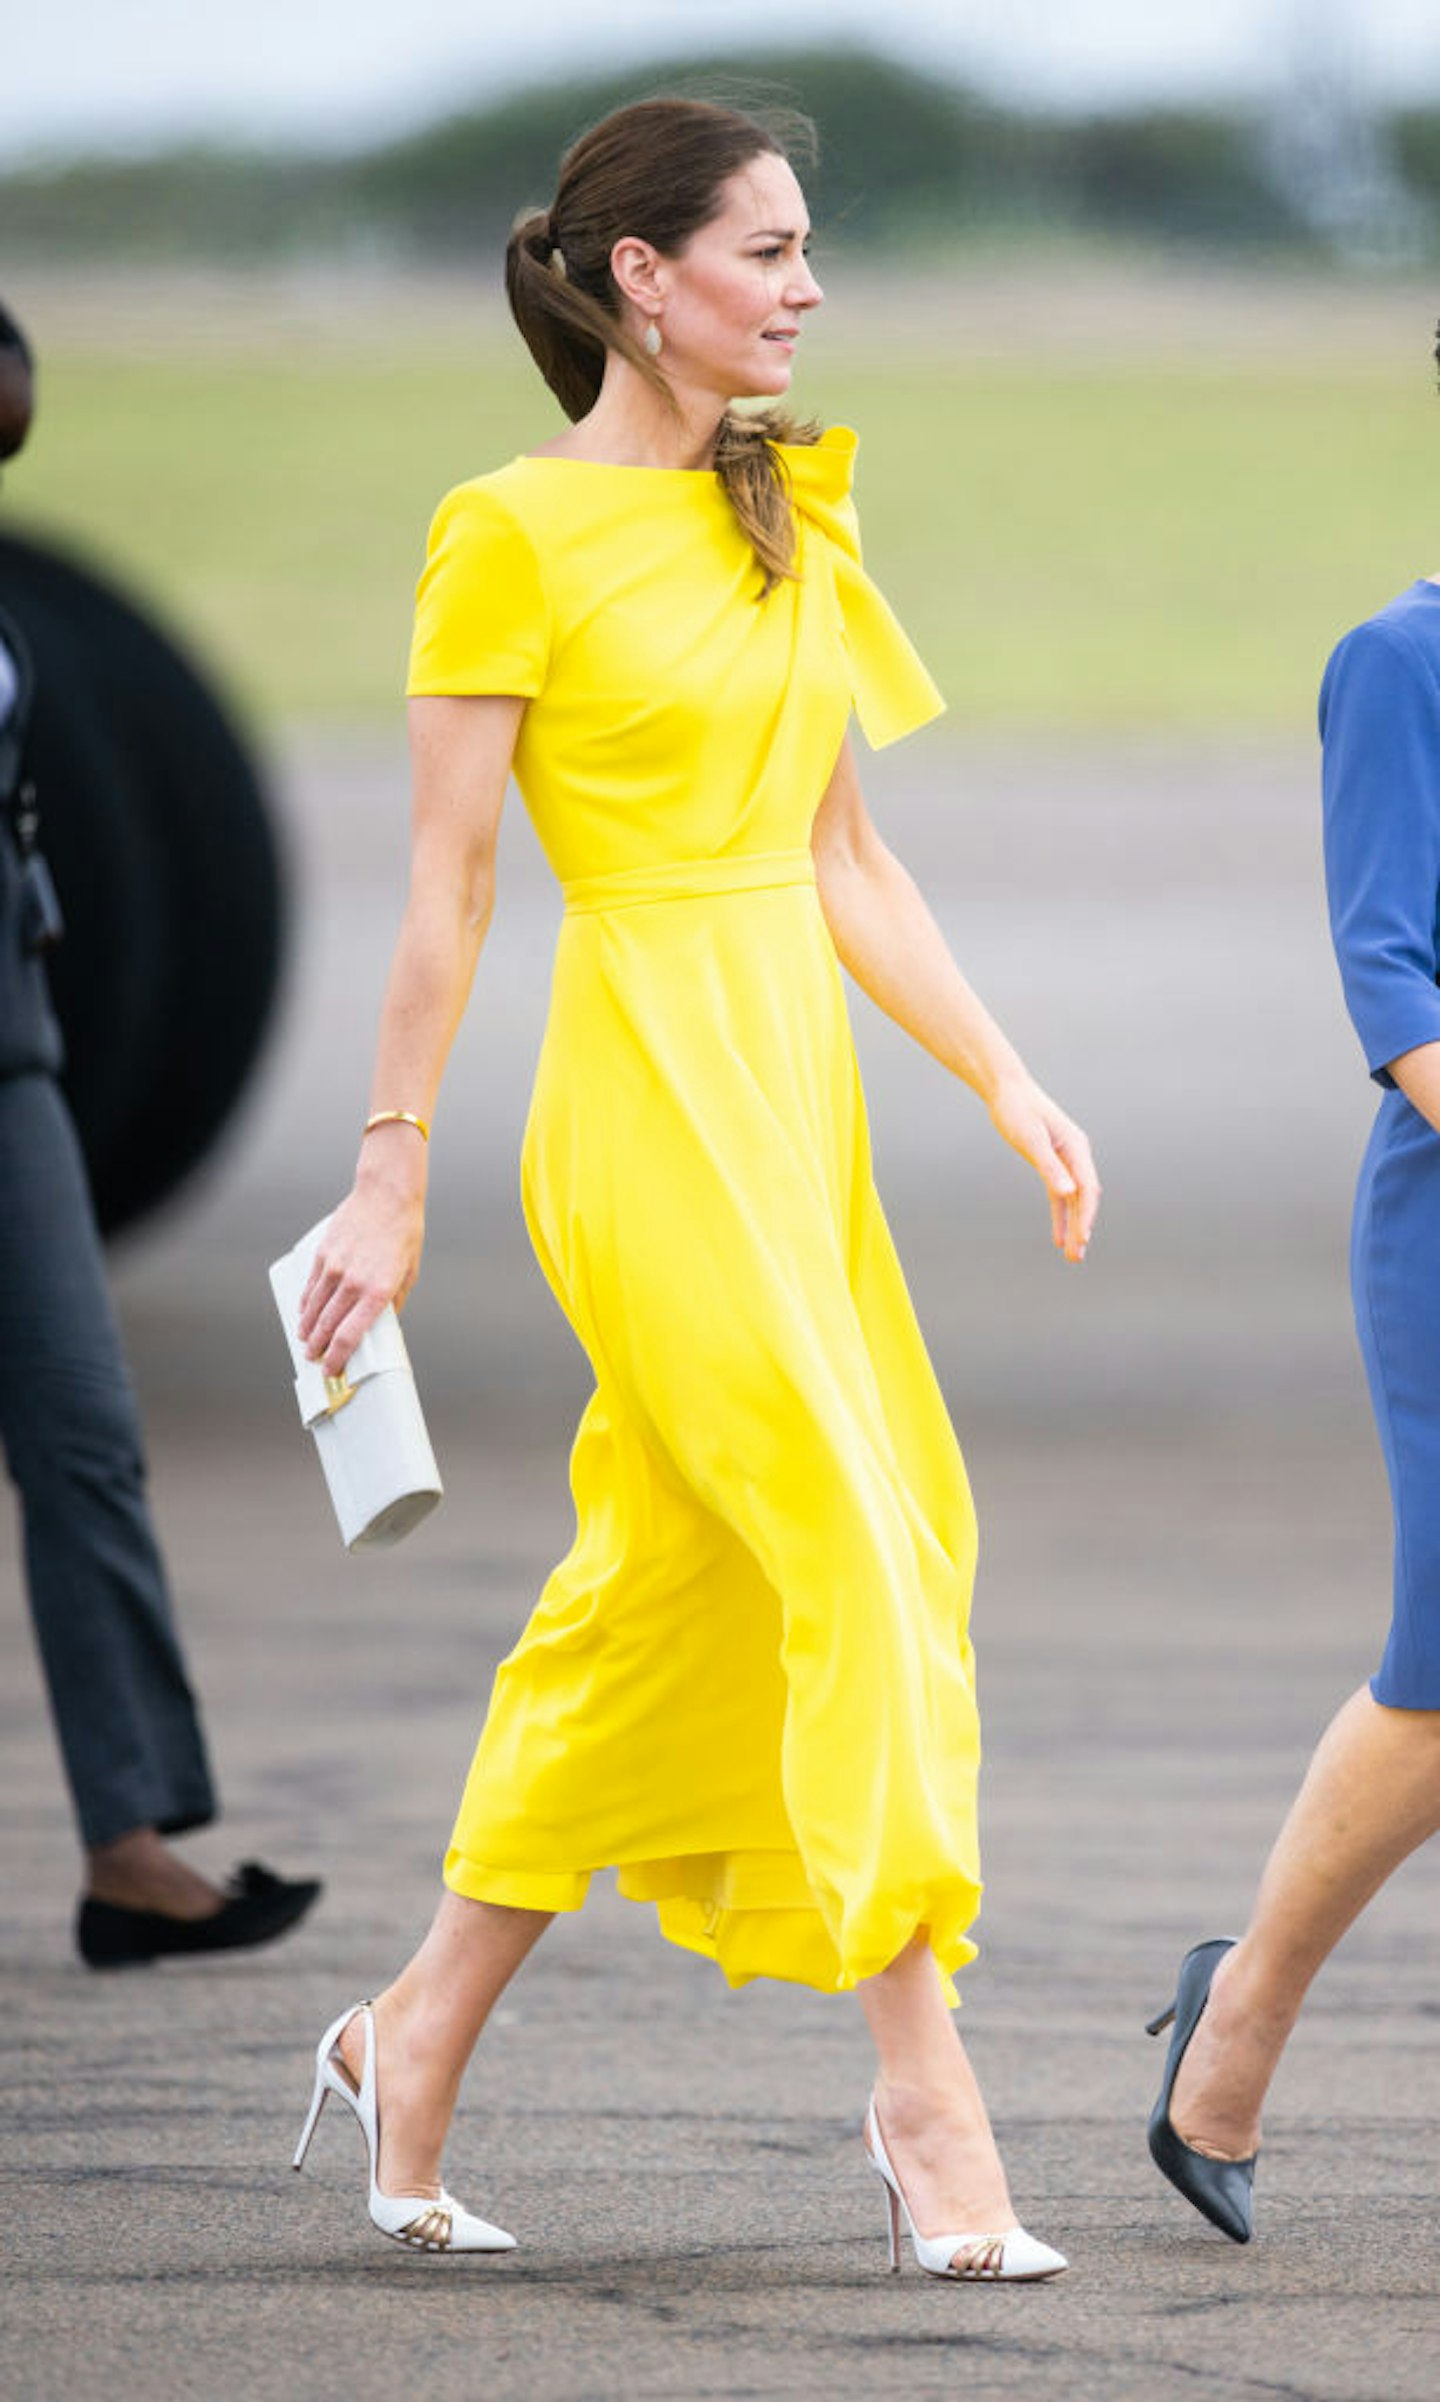 Kate Middleton rewearing outfits 